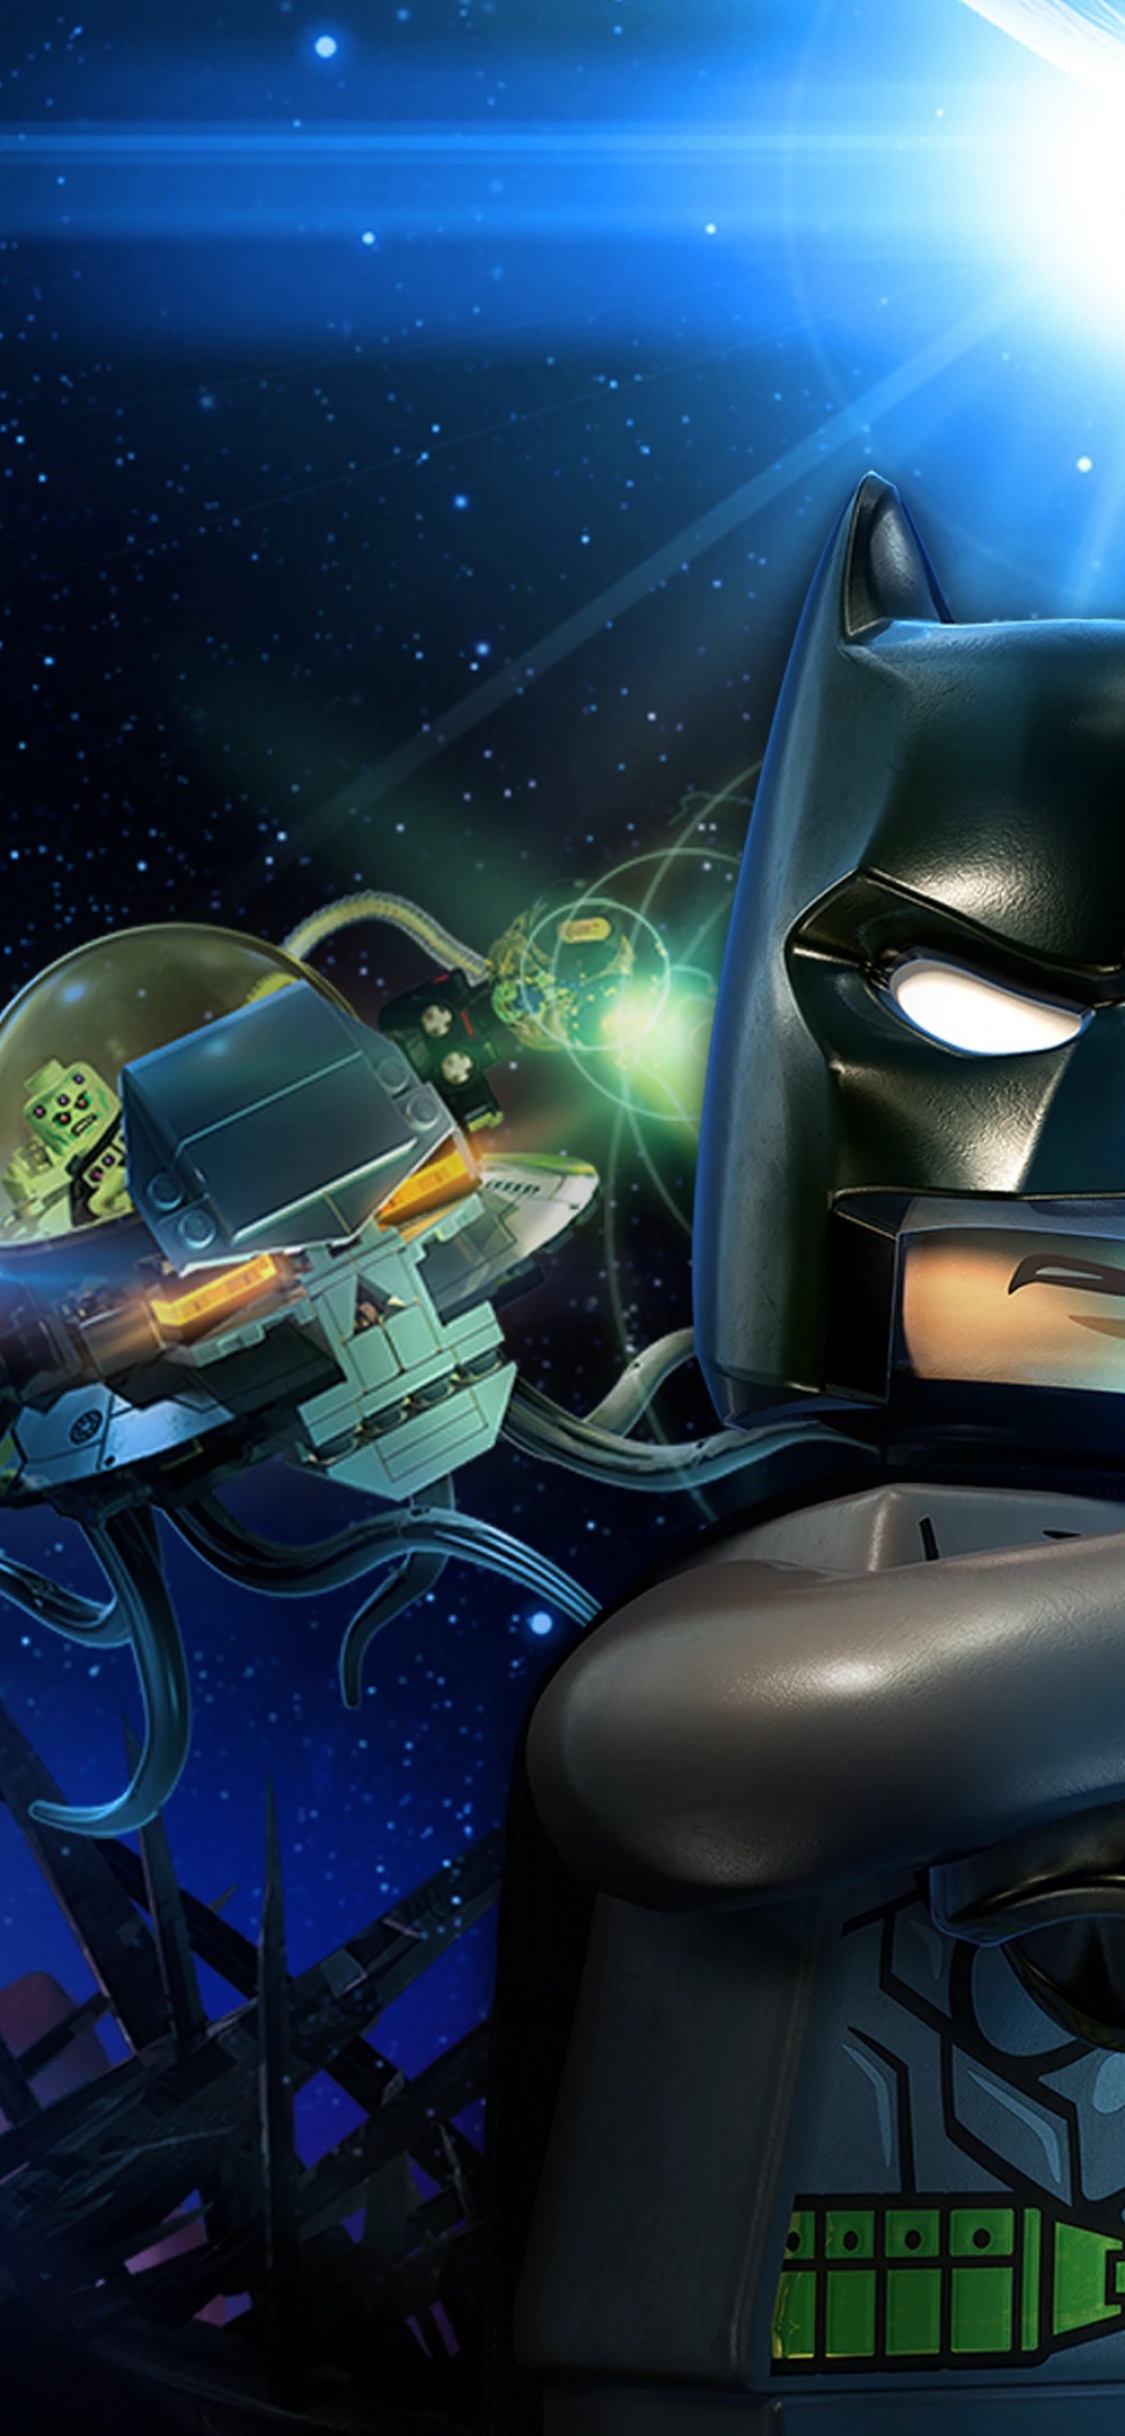 Batman movie Lego 1080x1920 iPhone 8766S Plus wallpaper background  picture image